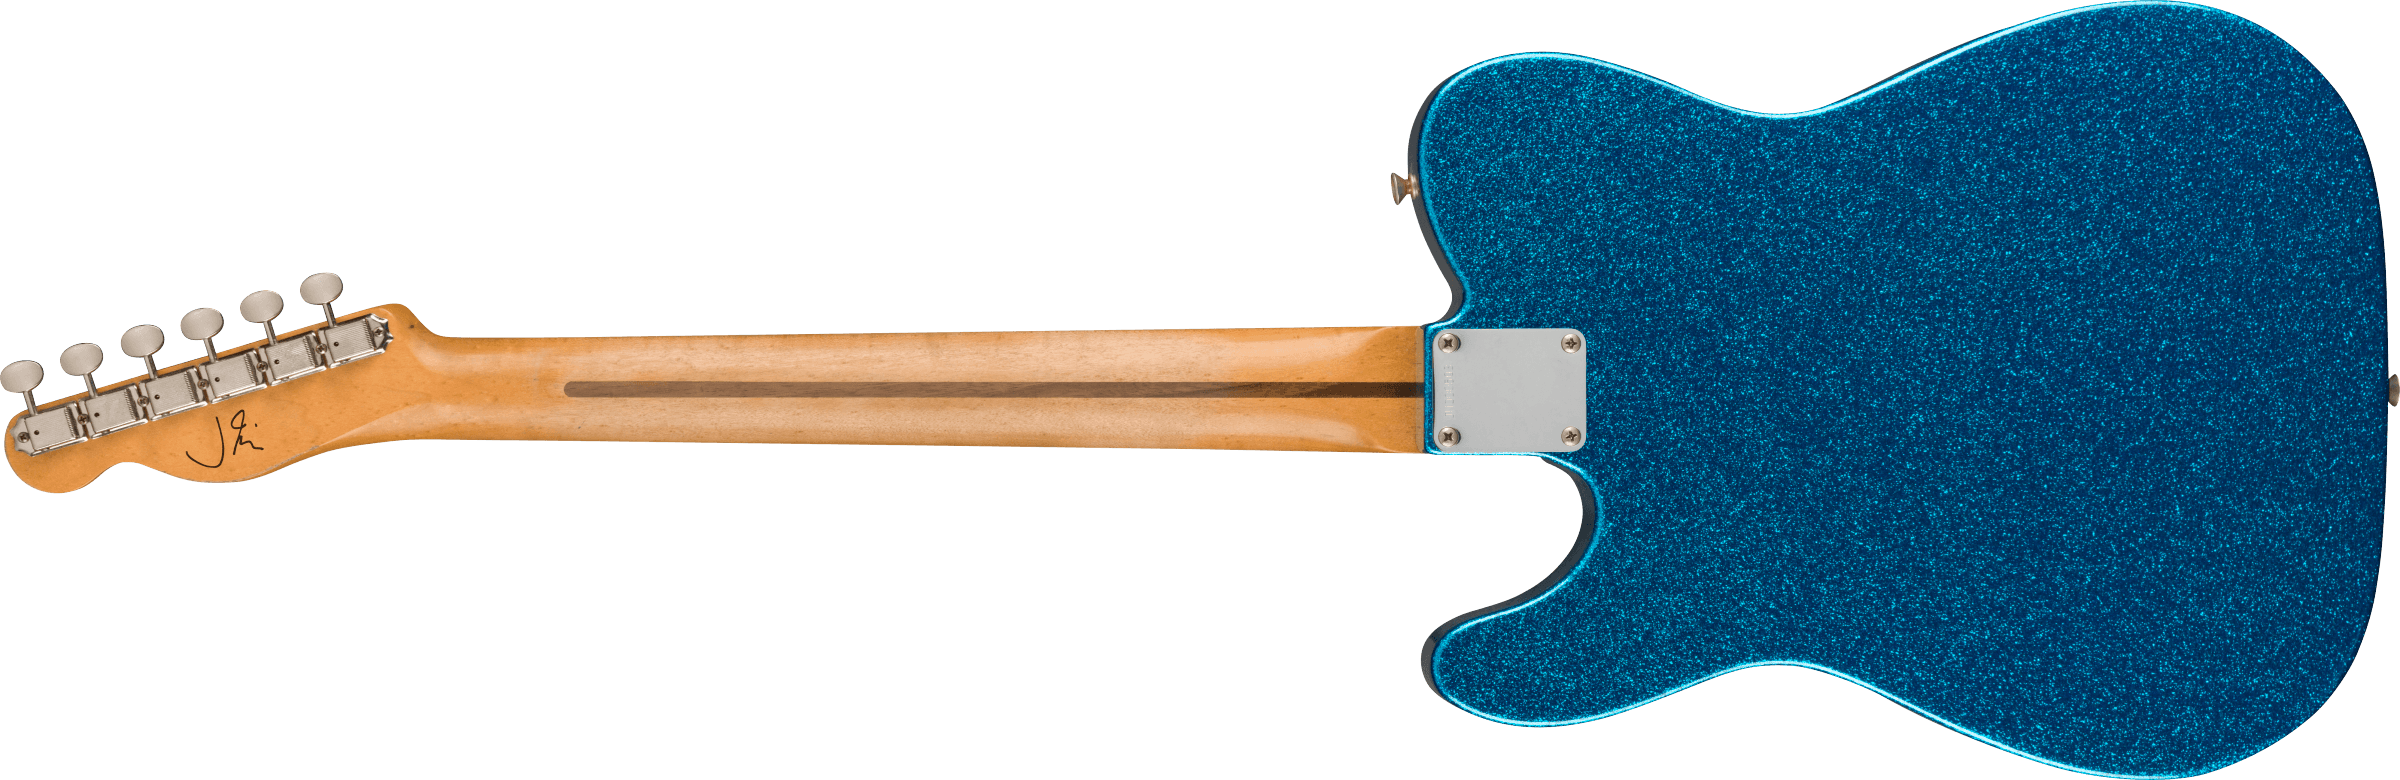 Fender Telecaster J. Mascis Signature 2s Ht Mn - Sparkle Blue - Televorm elektrische gitaar - Variation 1